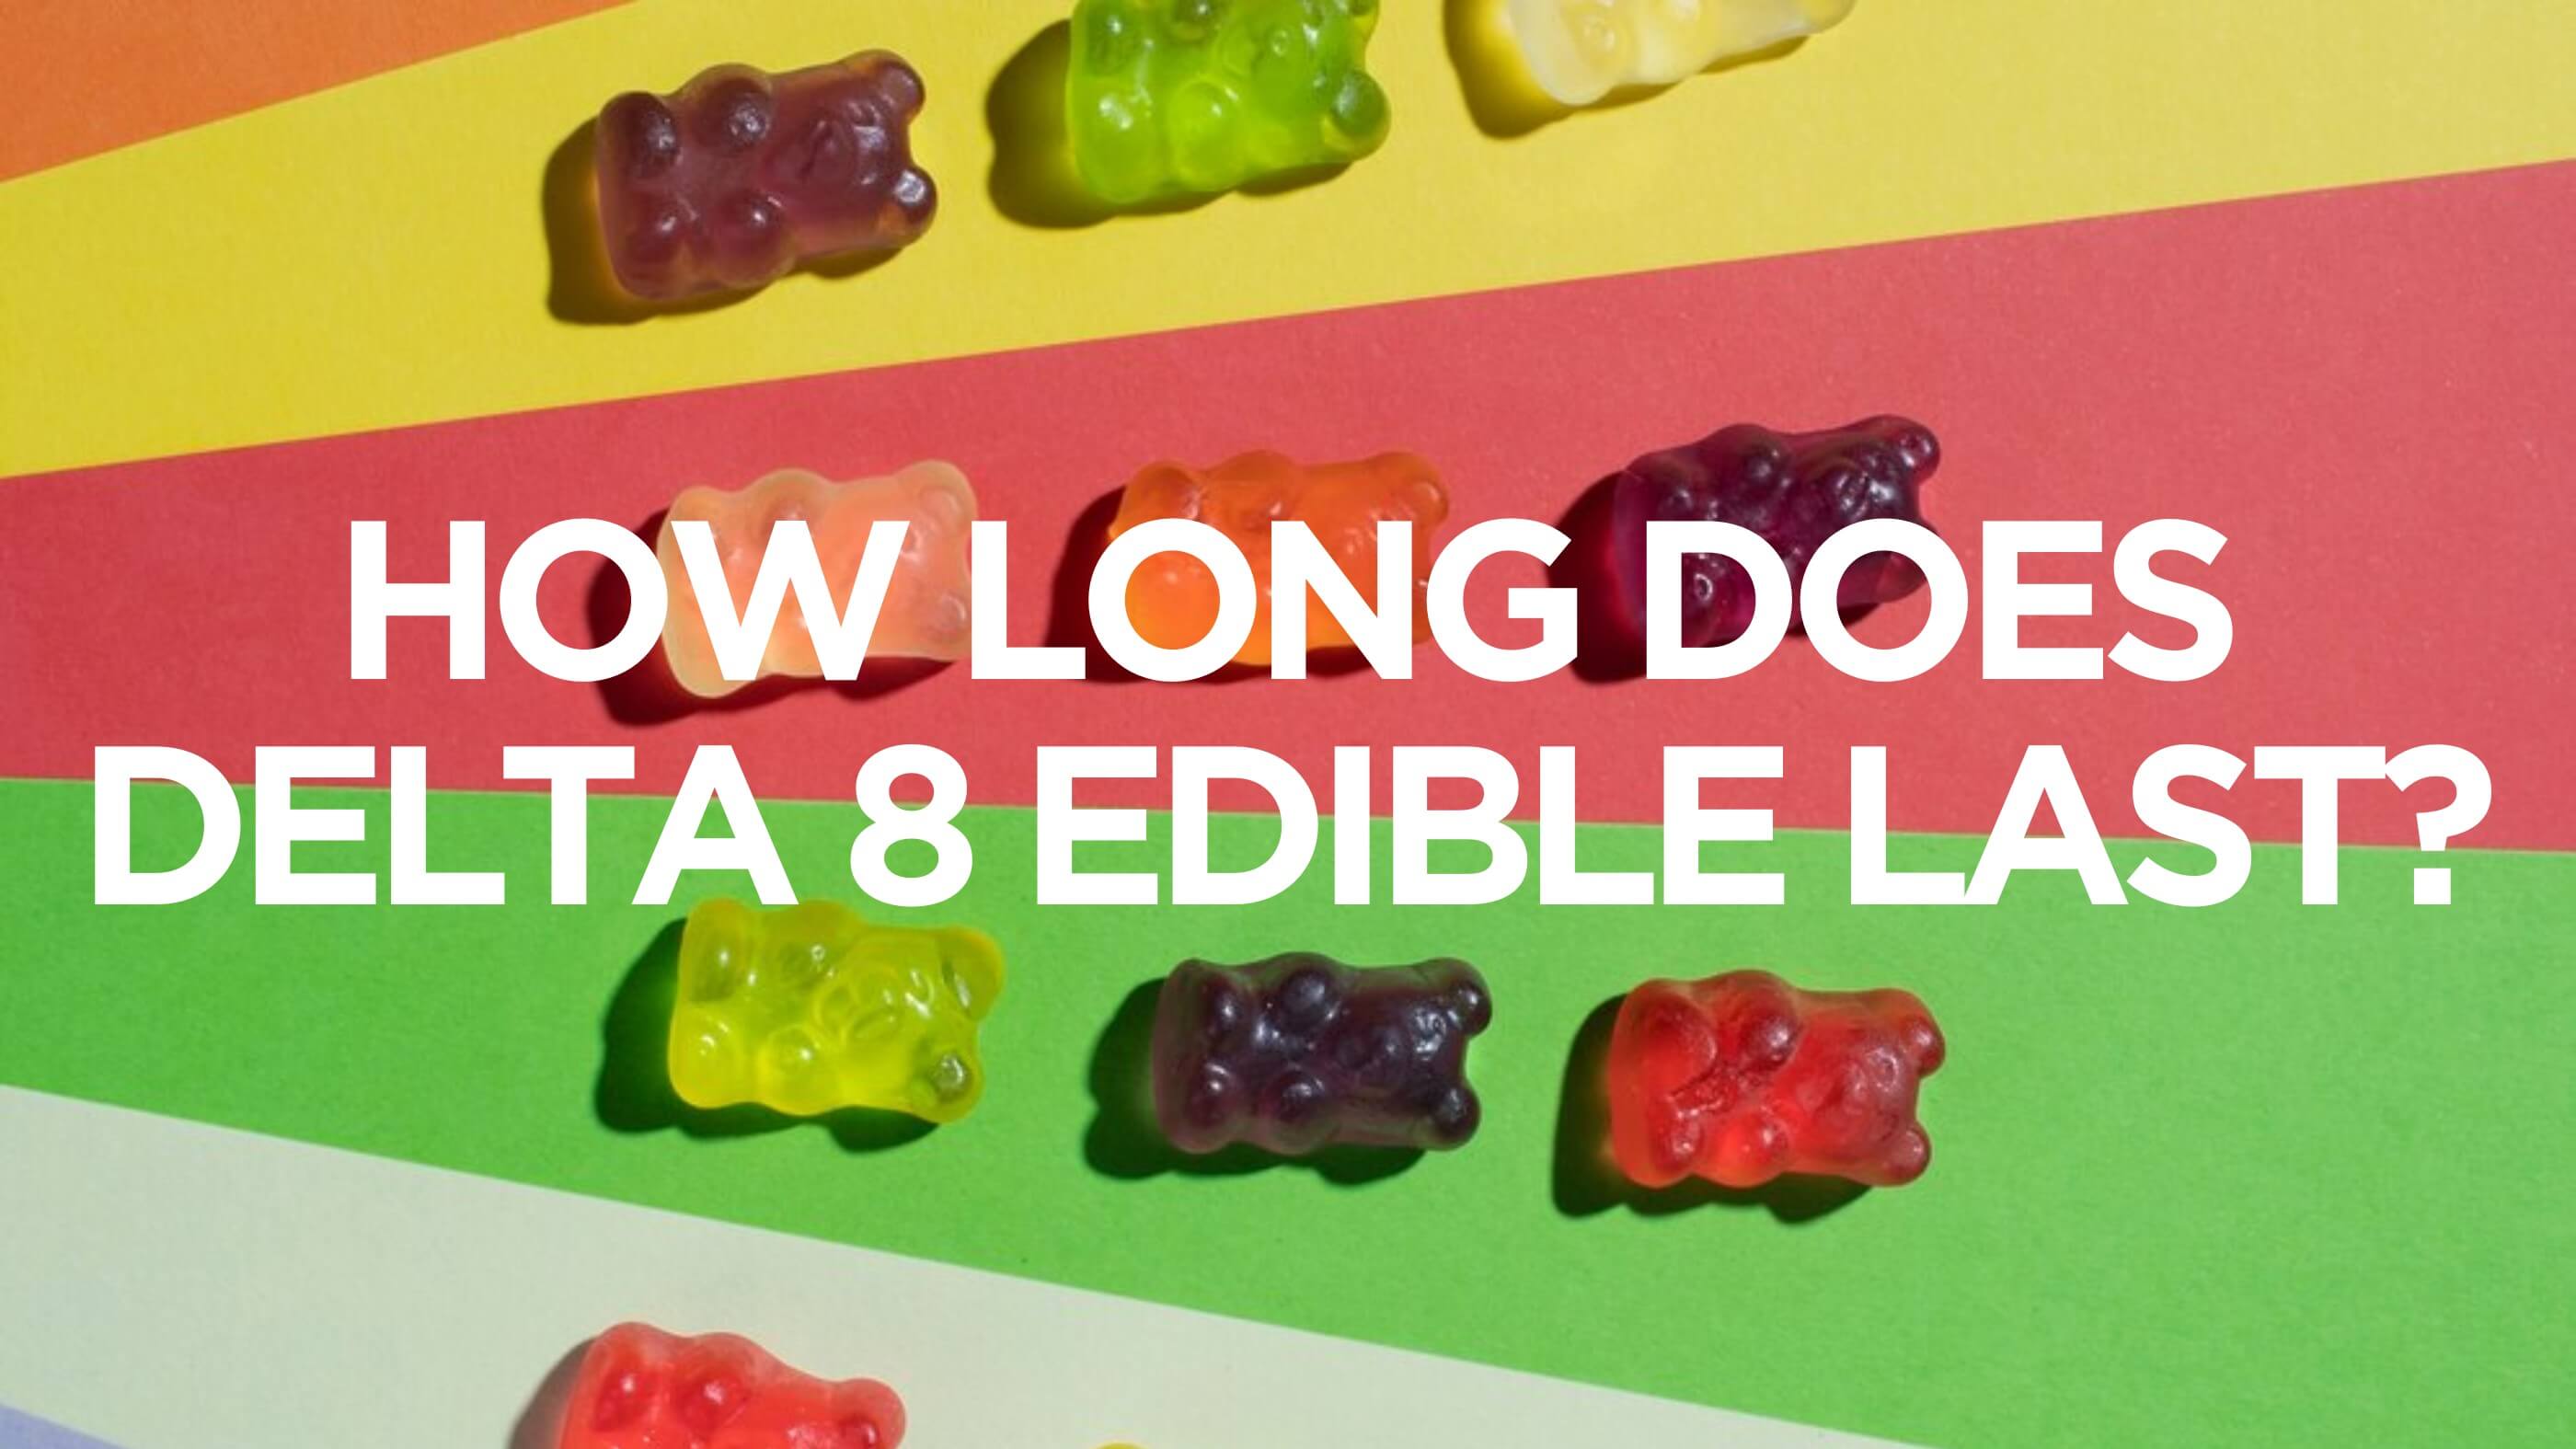 delta 8 edibles last